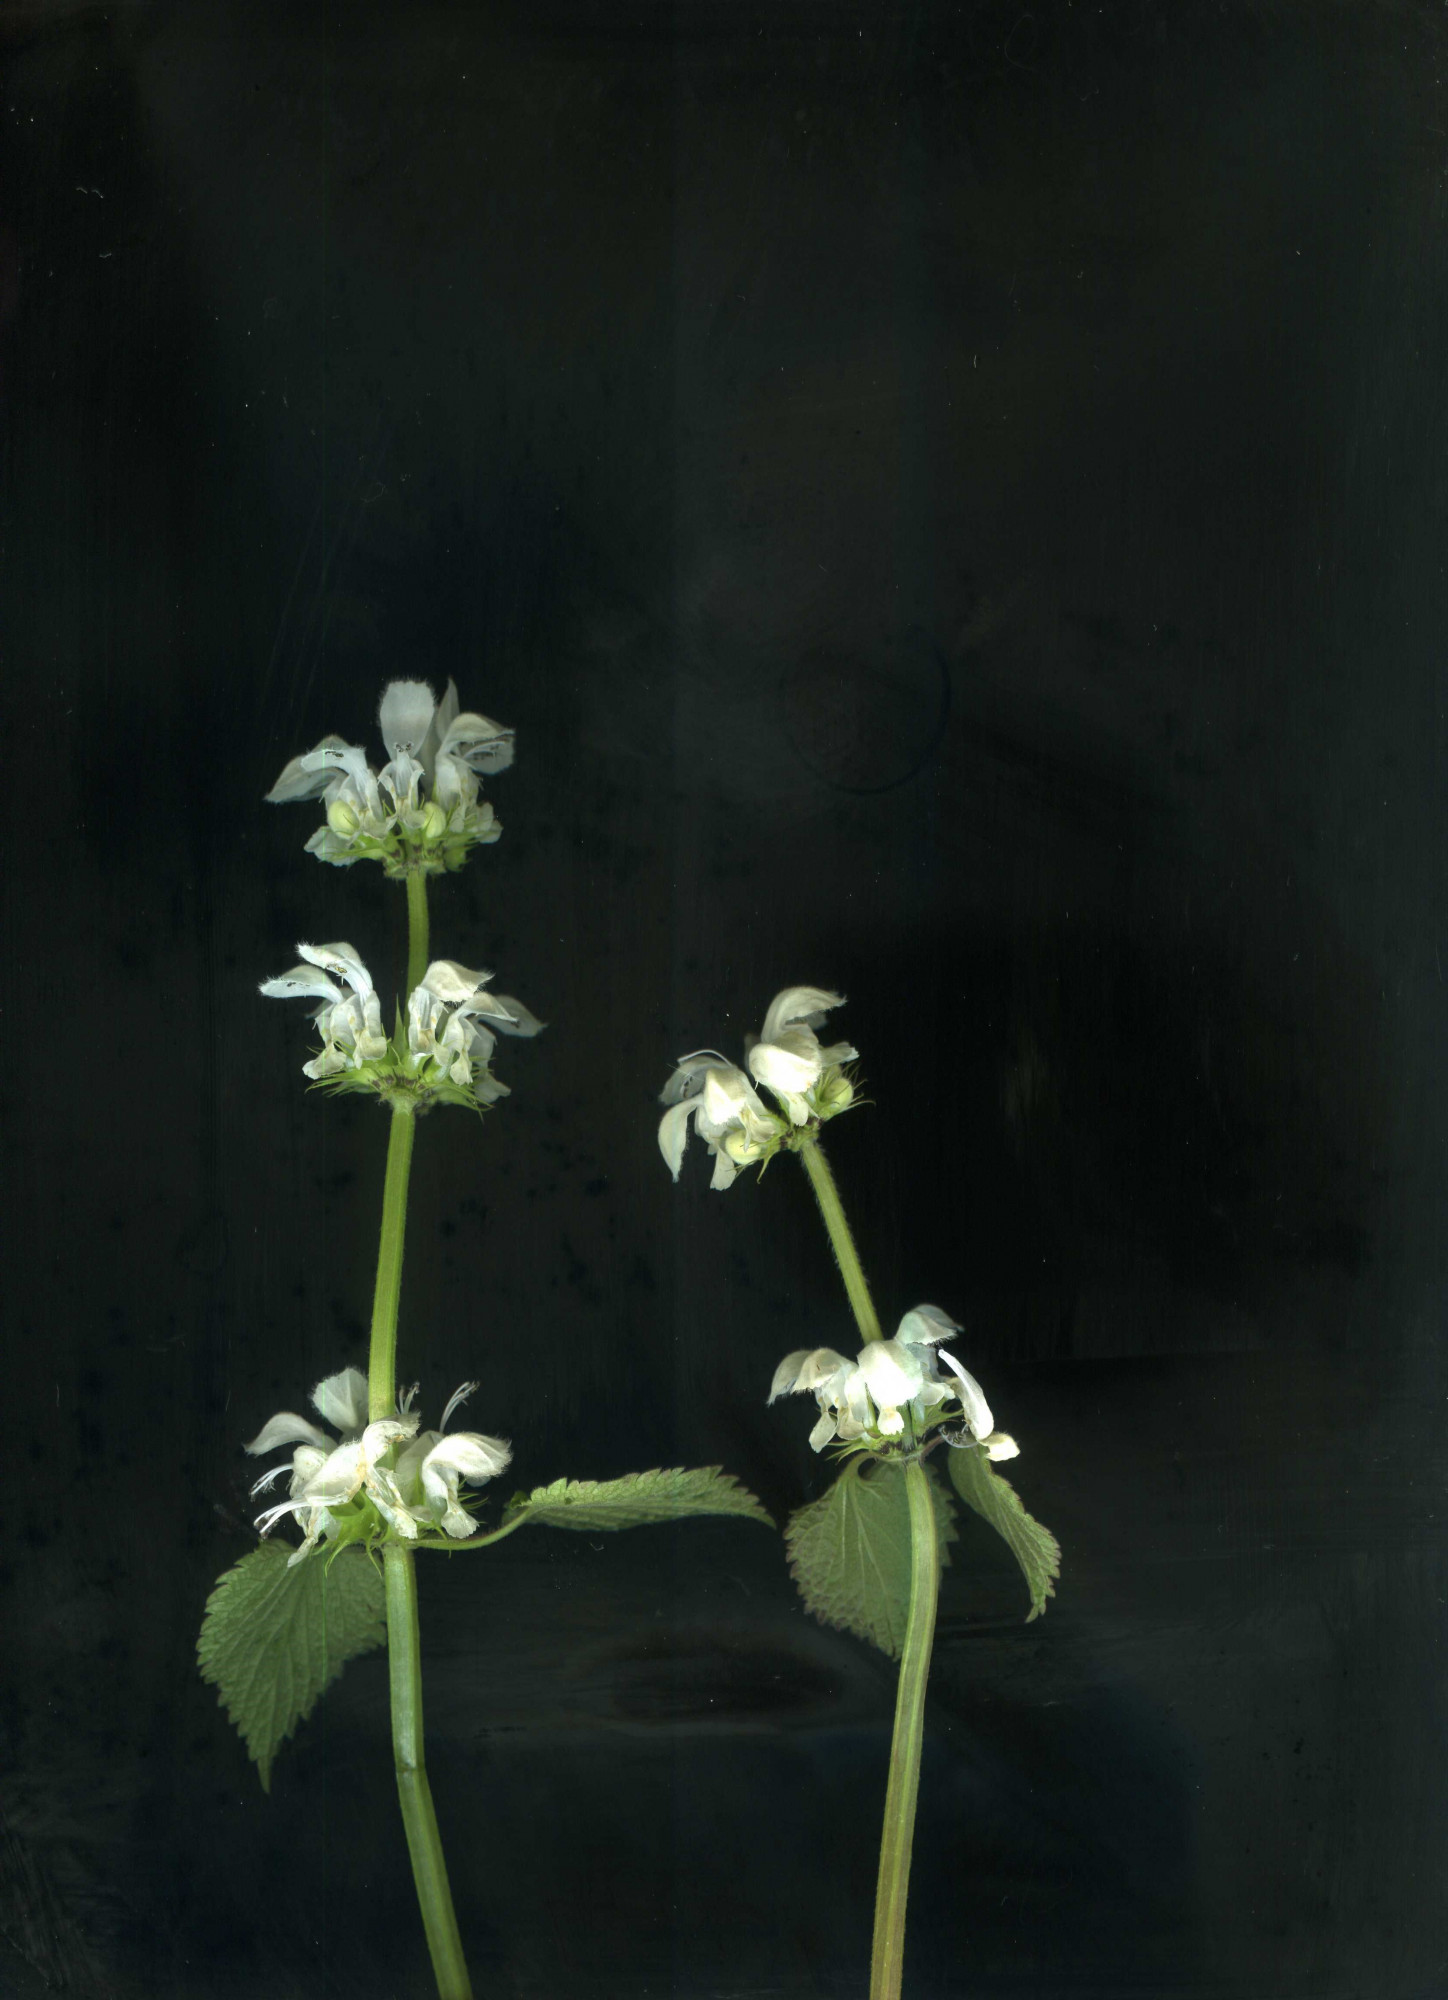 Impossible Herbarium, 2019-2021. The artist rearranges plants, creating new species in her scanograms